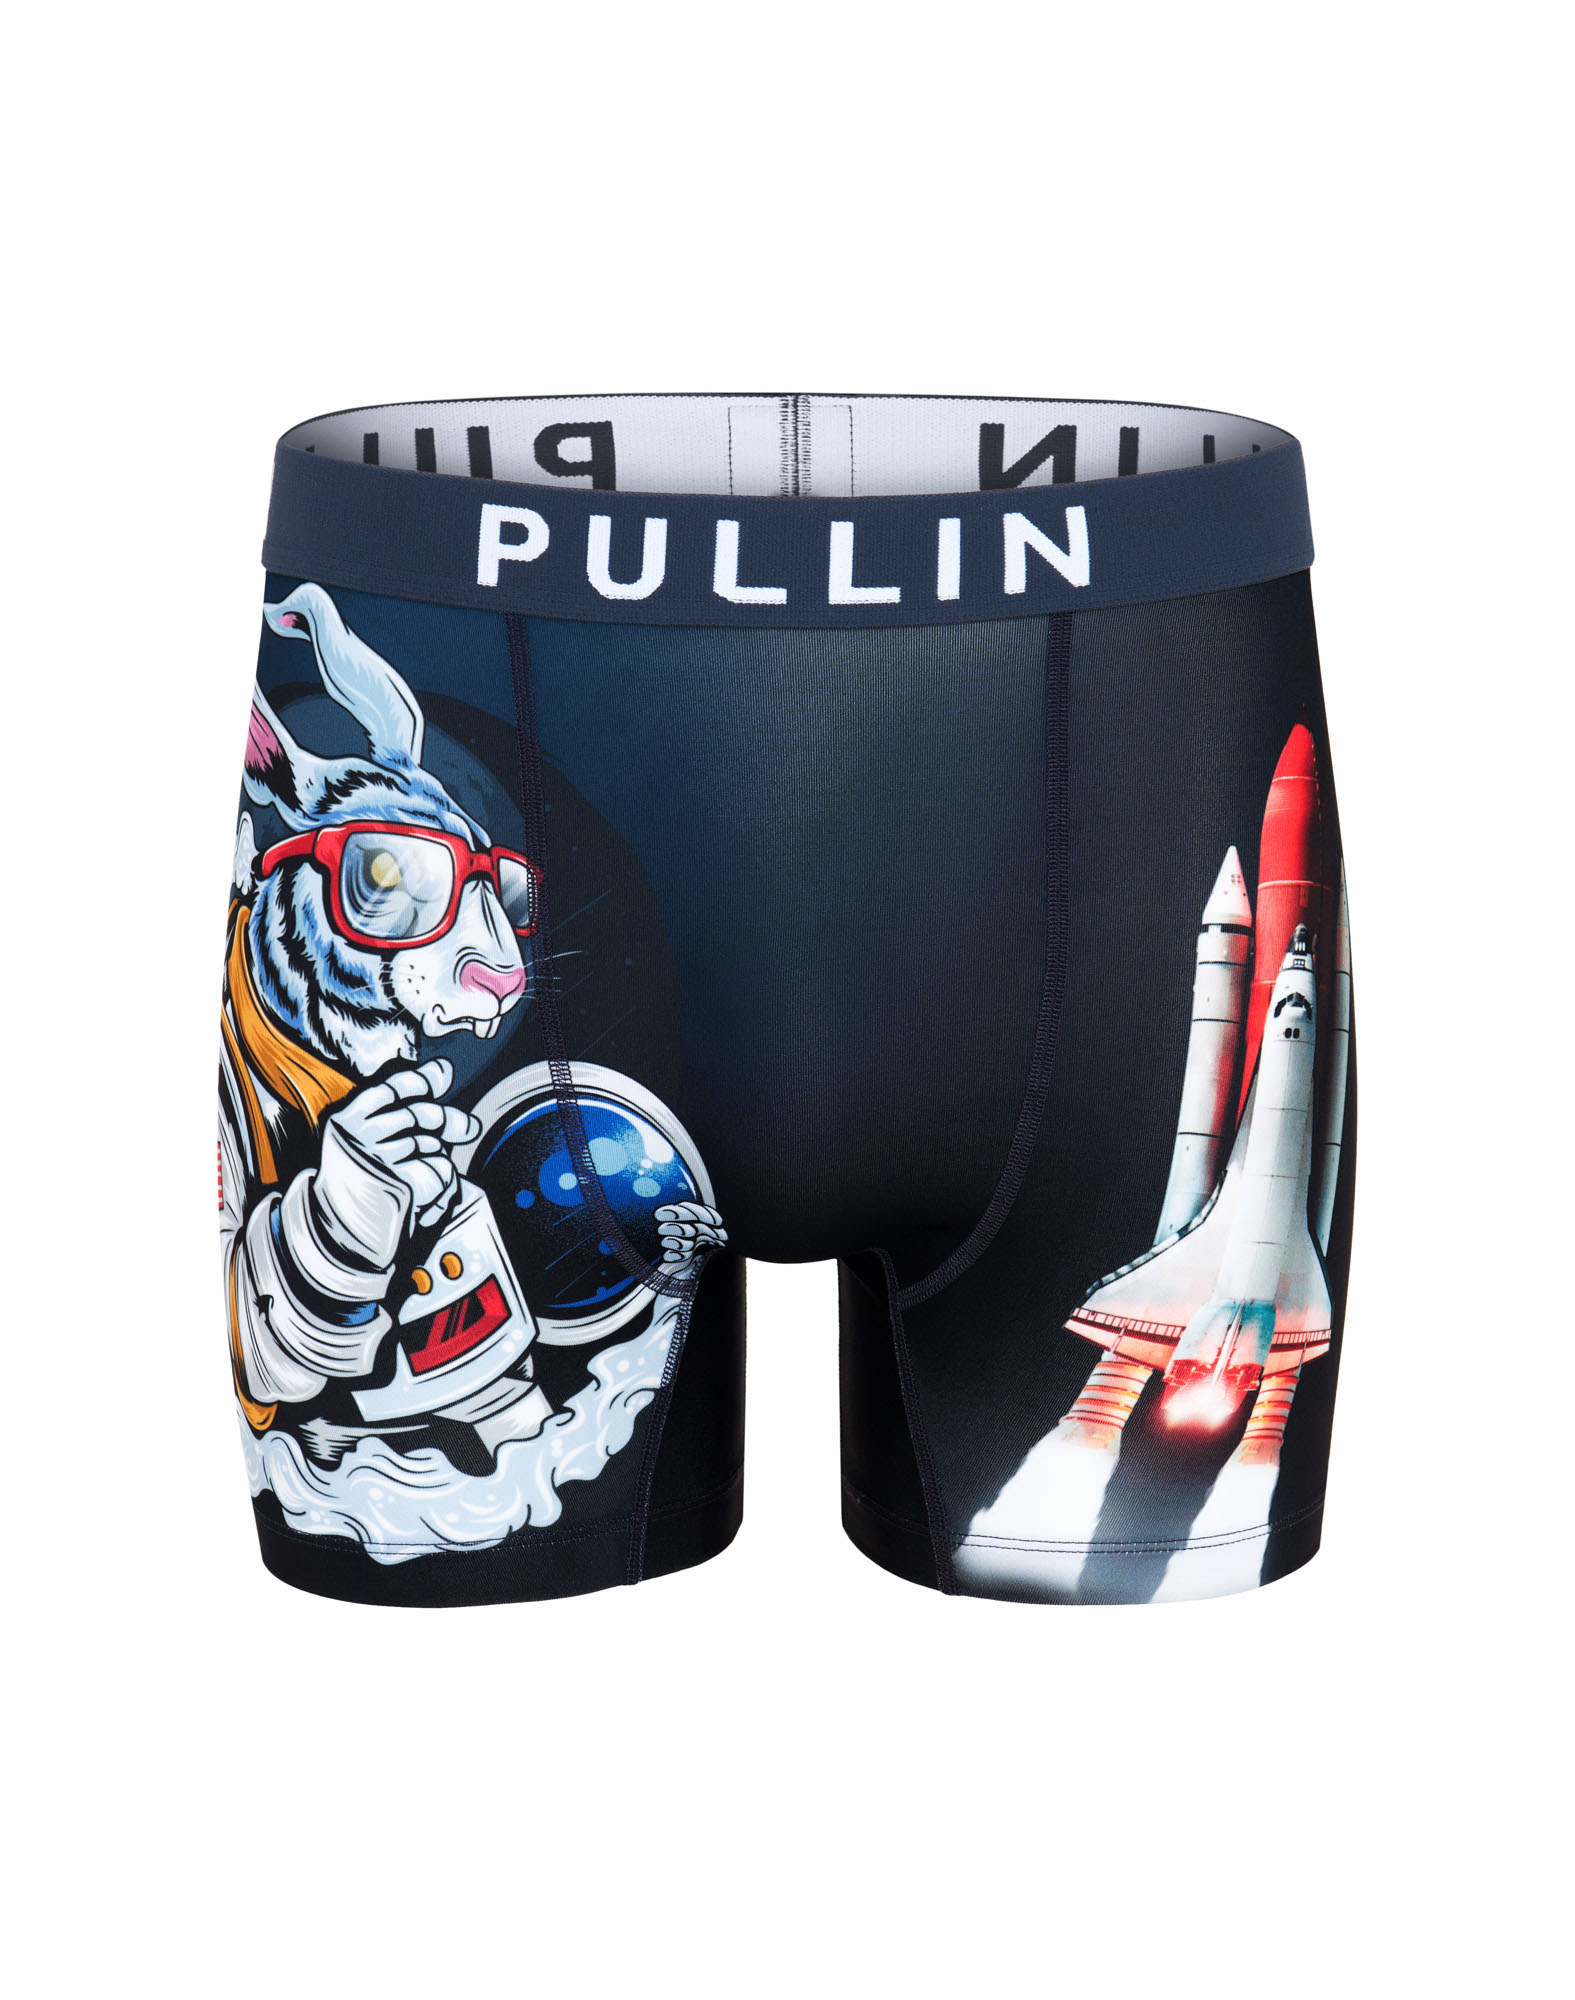 MULTICOLORED MEN'S TRUNK FASHION 2 SPACERAB - Men's underwear PULLIN